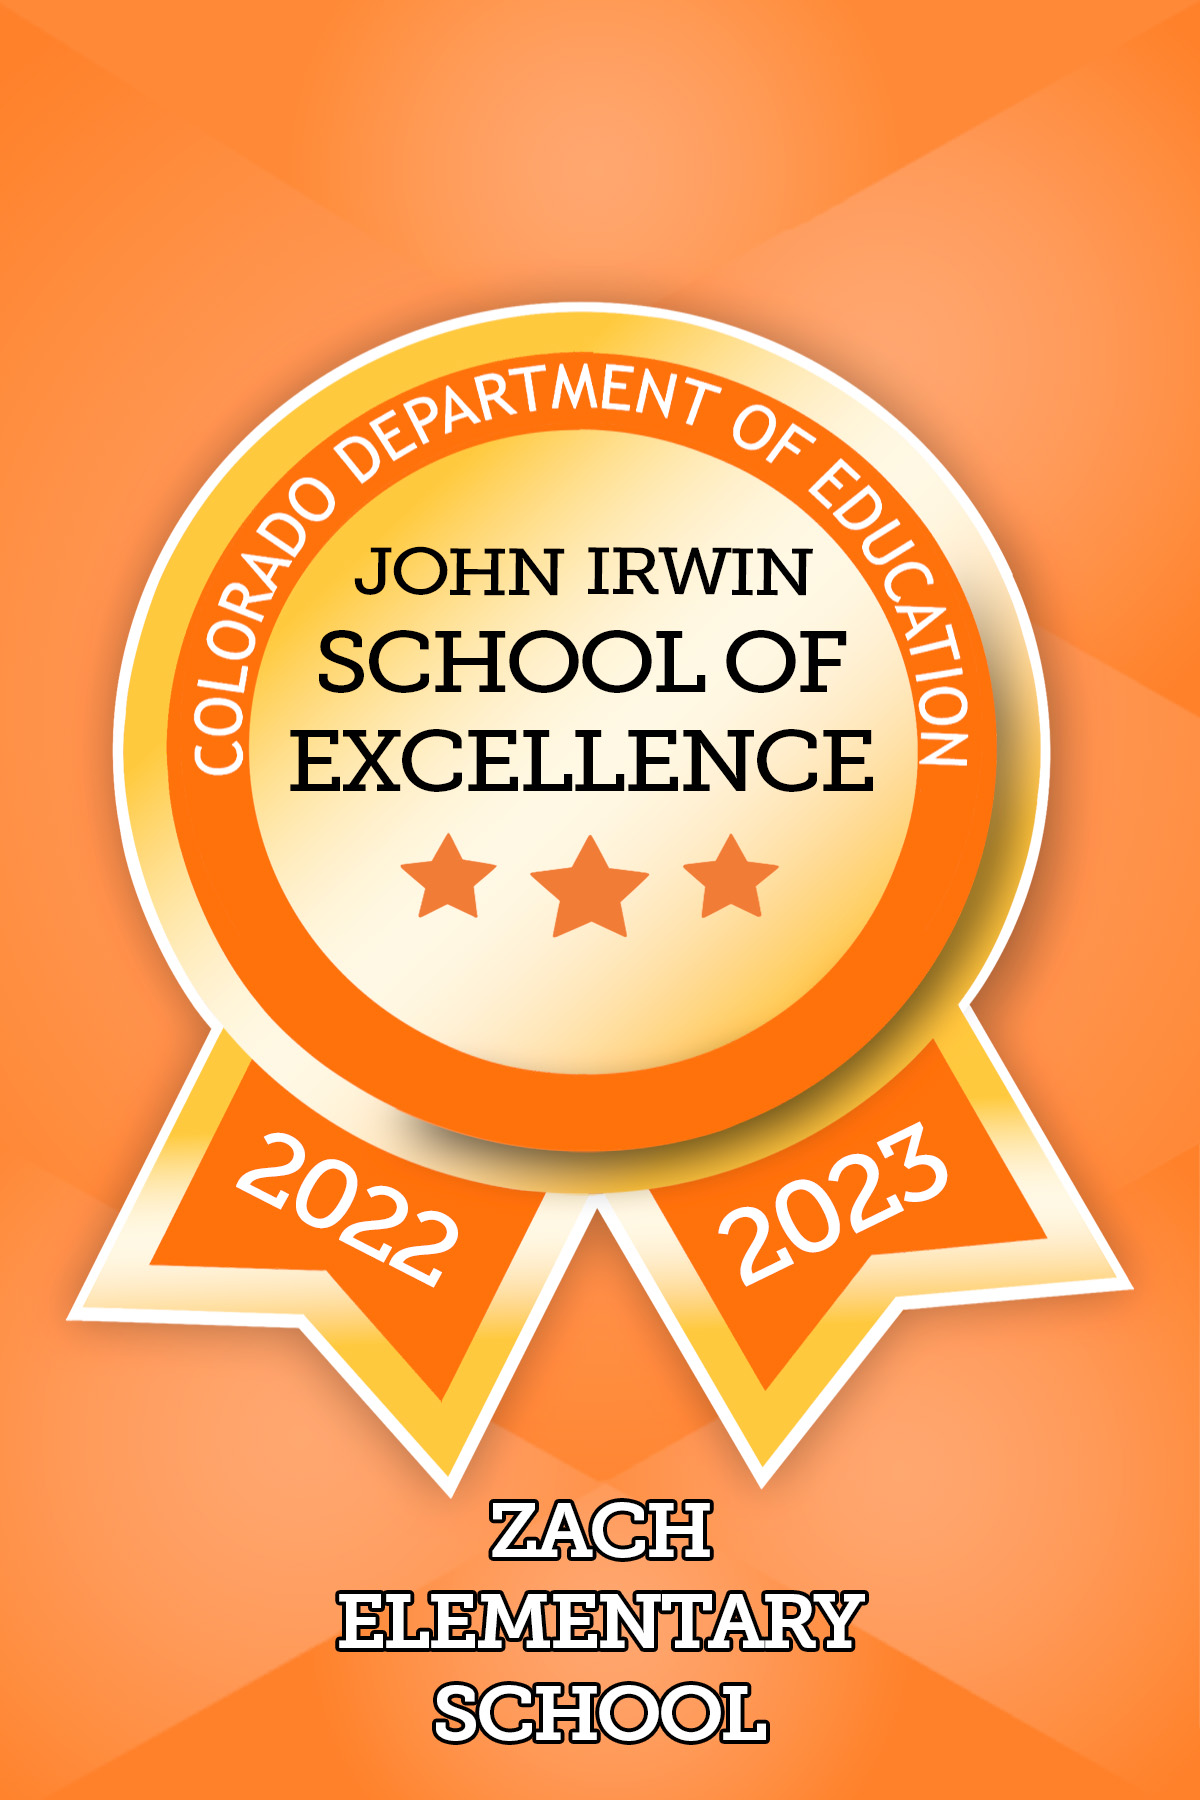 Colorado Department of Education John Irwin School of Excellence award